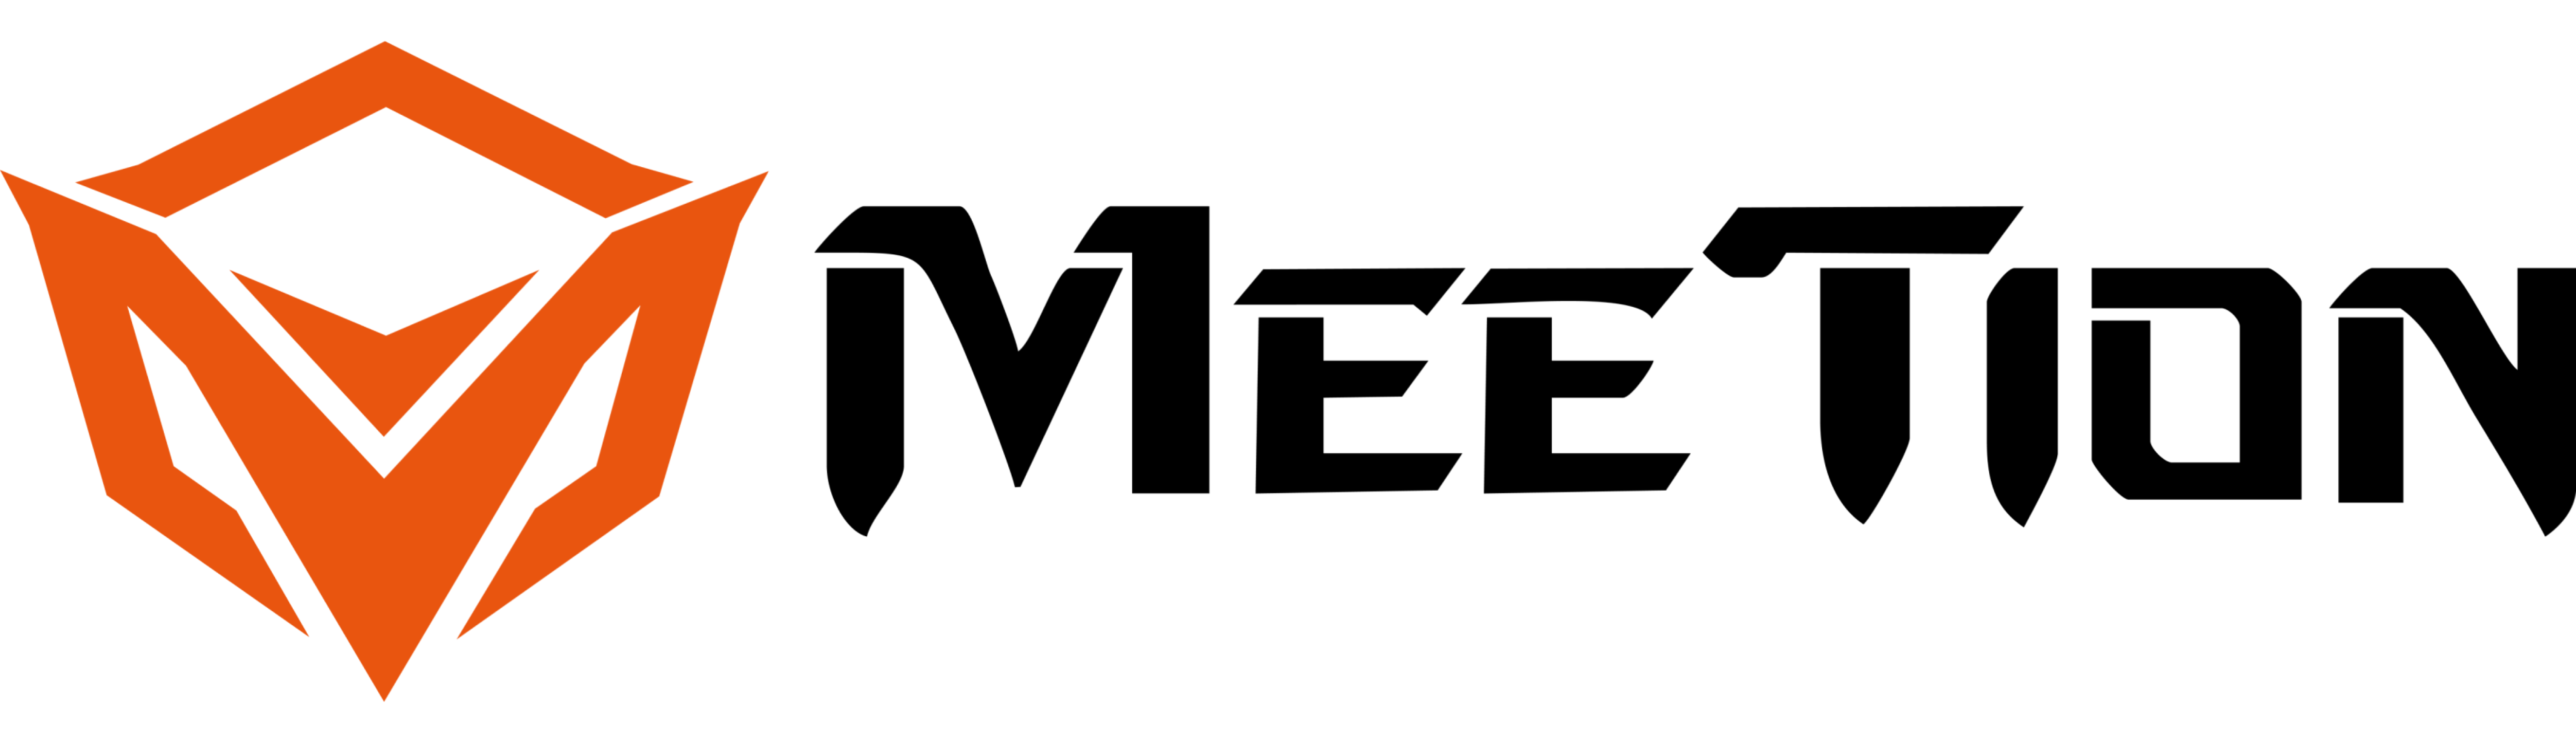 Meetion  - Meetion